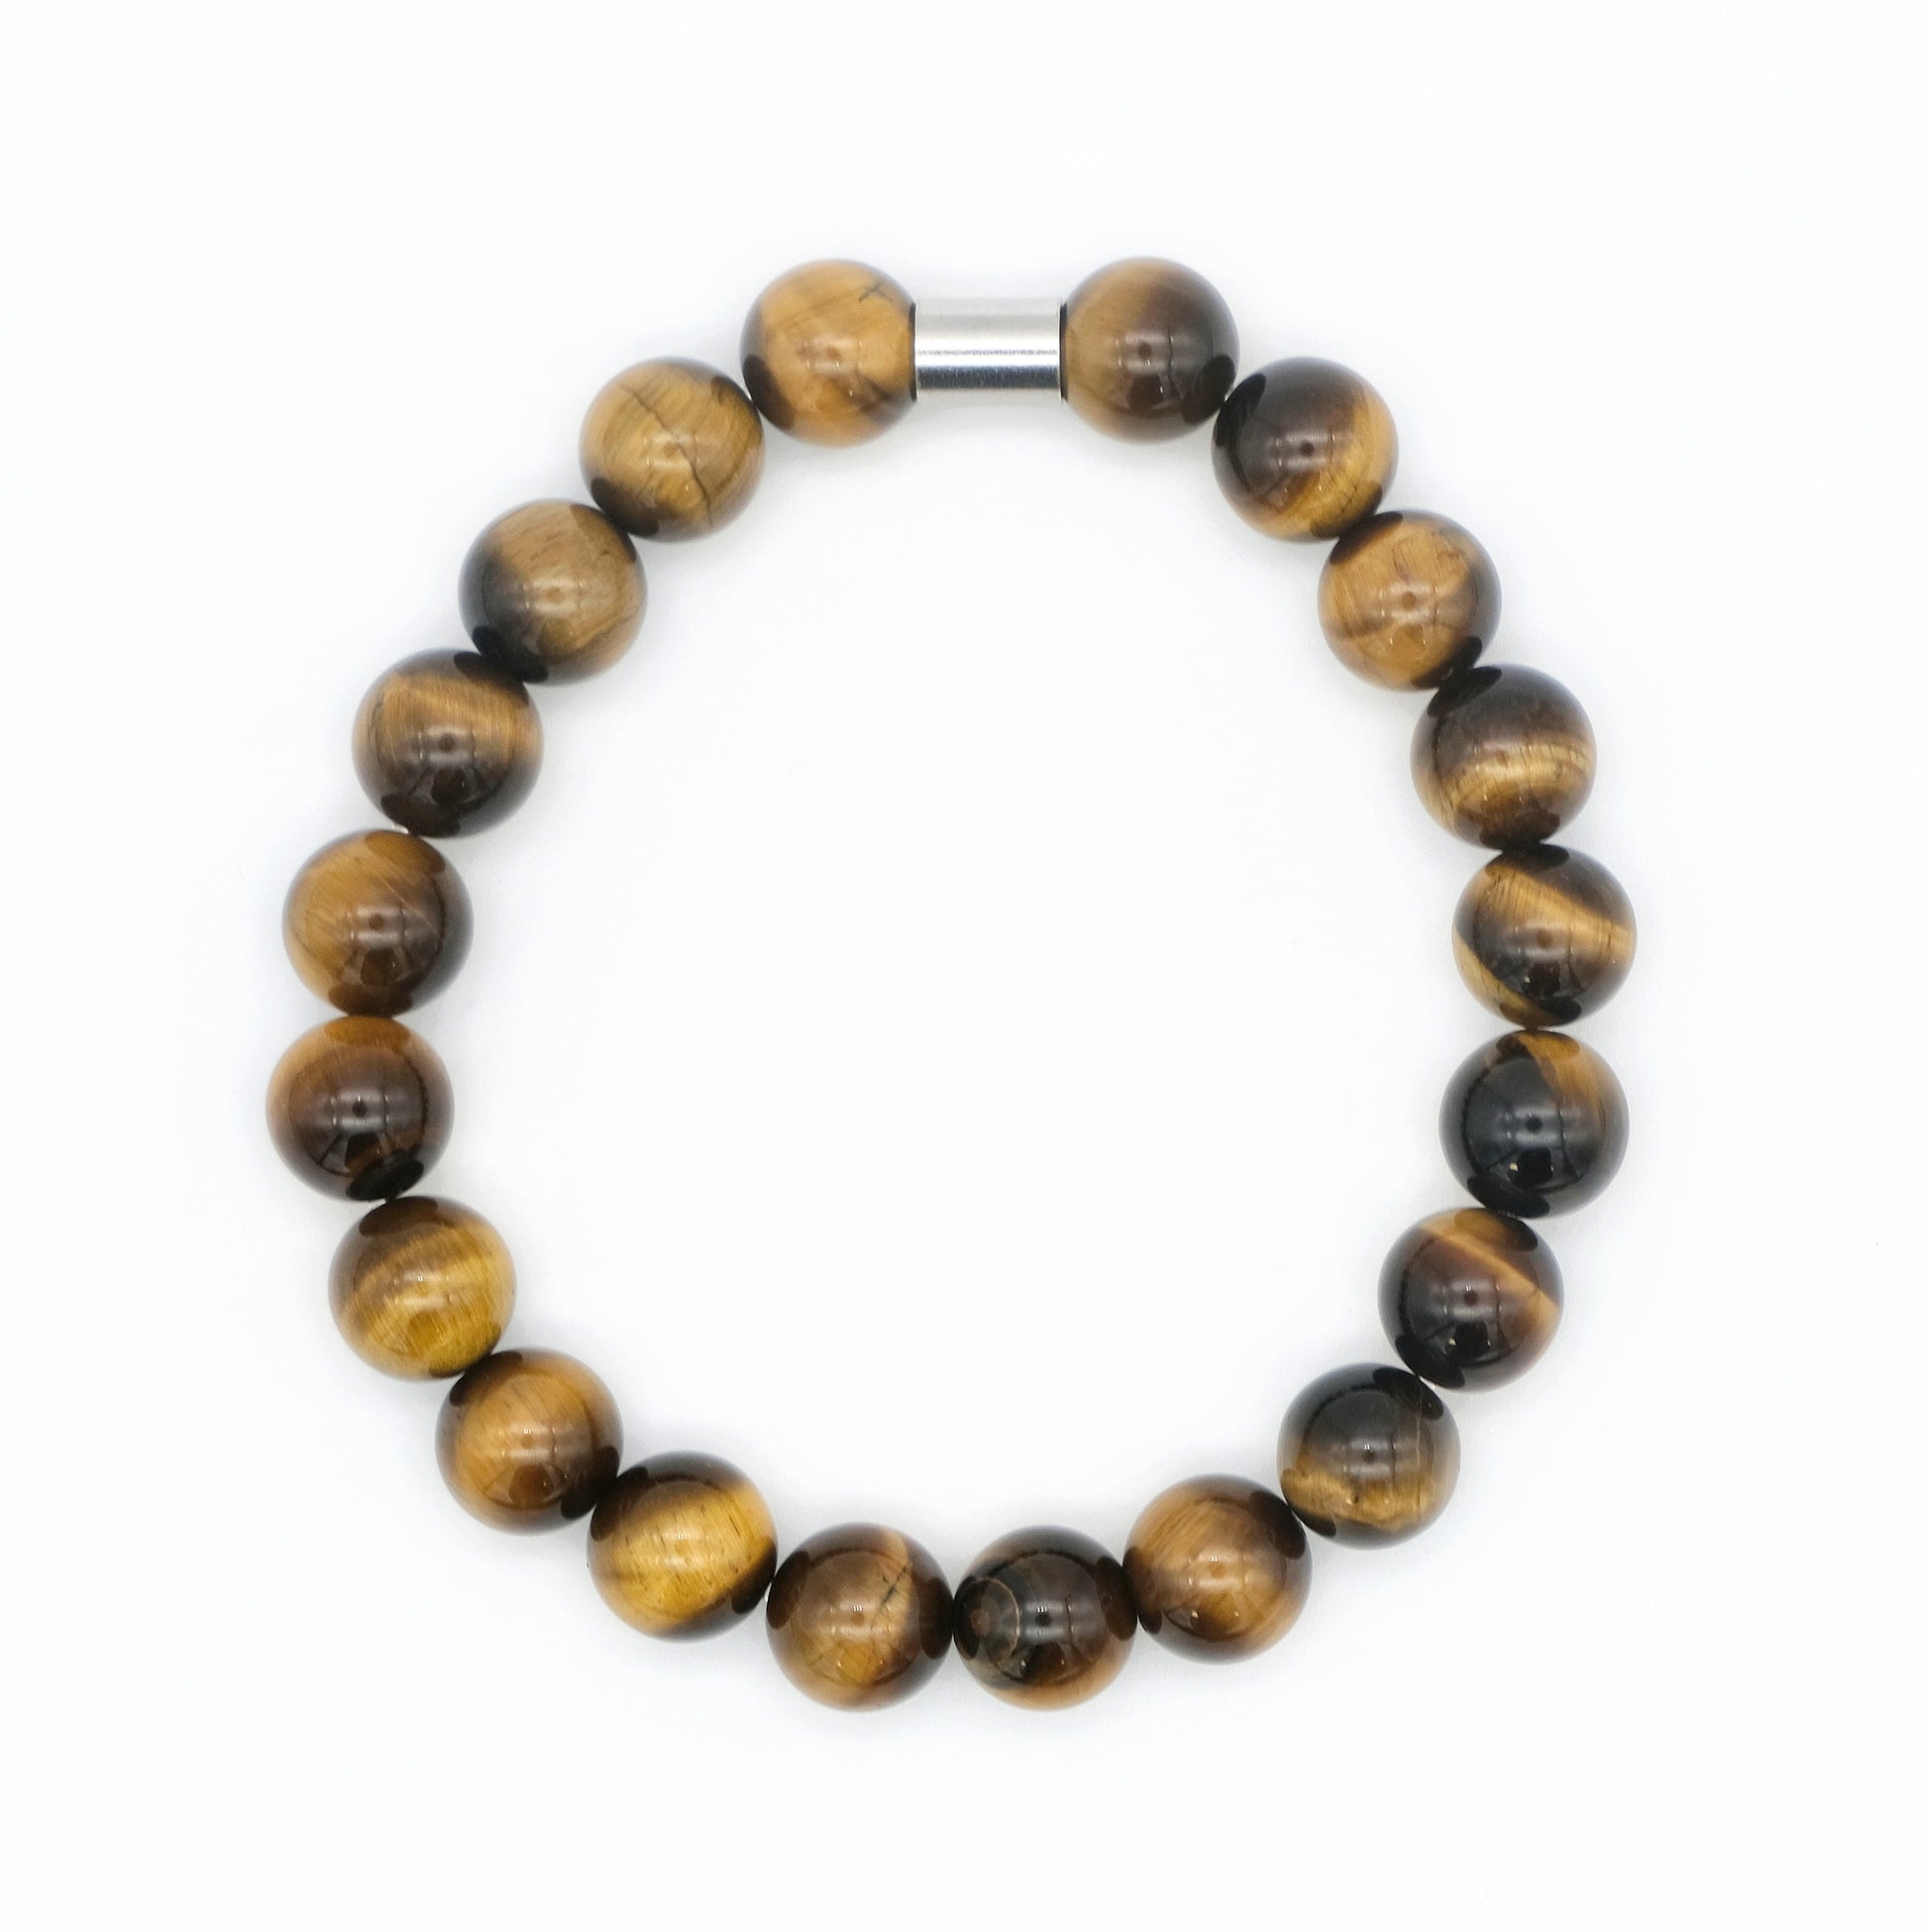 tiger eye gemstone bracelet in 10mm beads from above